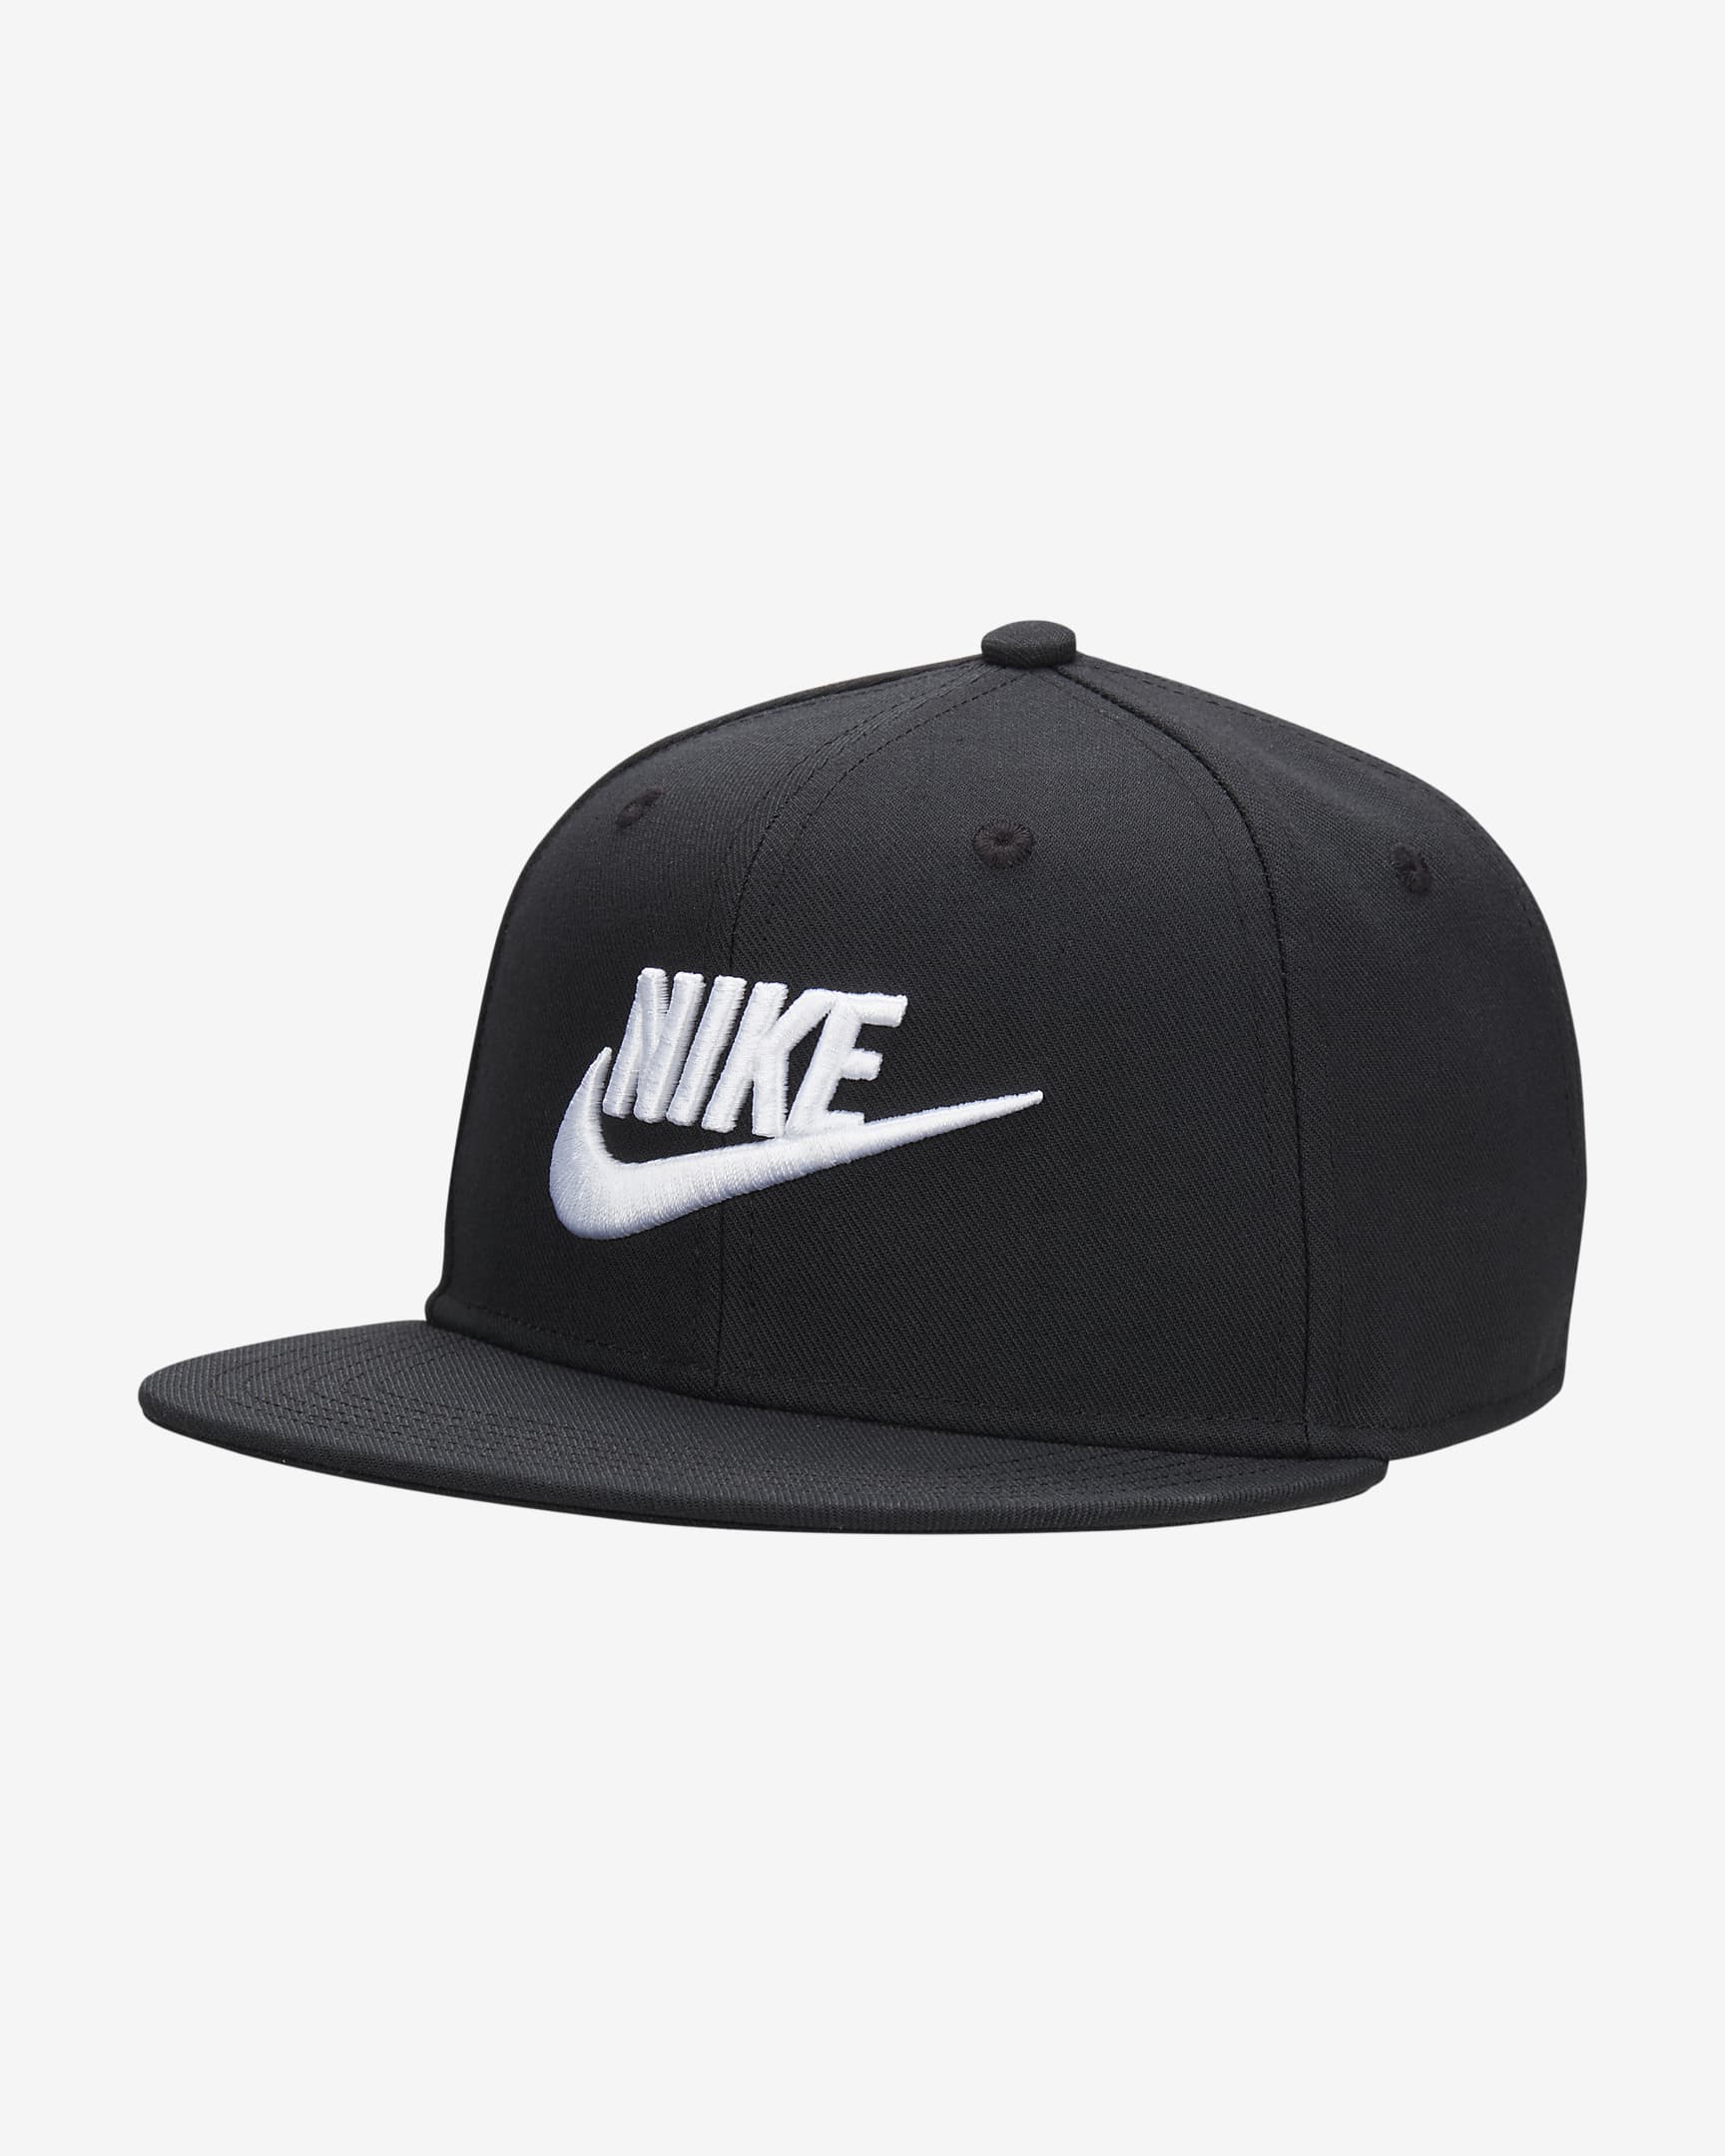 Nike Dri-FIT Pro Kids' Structured Futura Cap - Black/Black/White